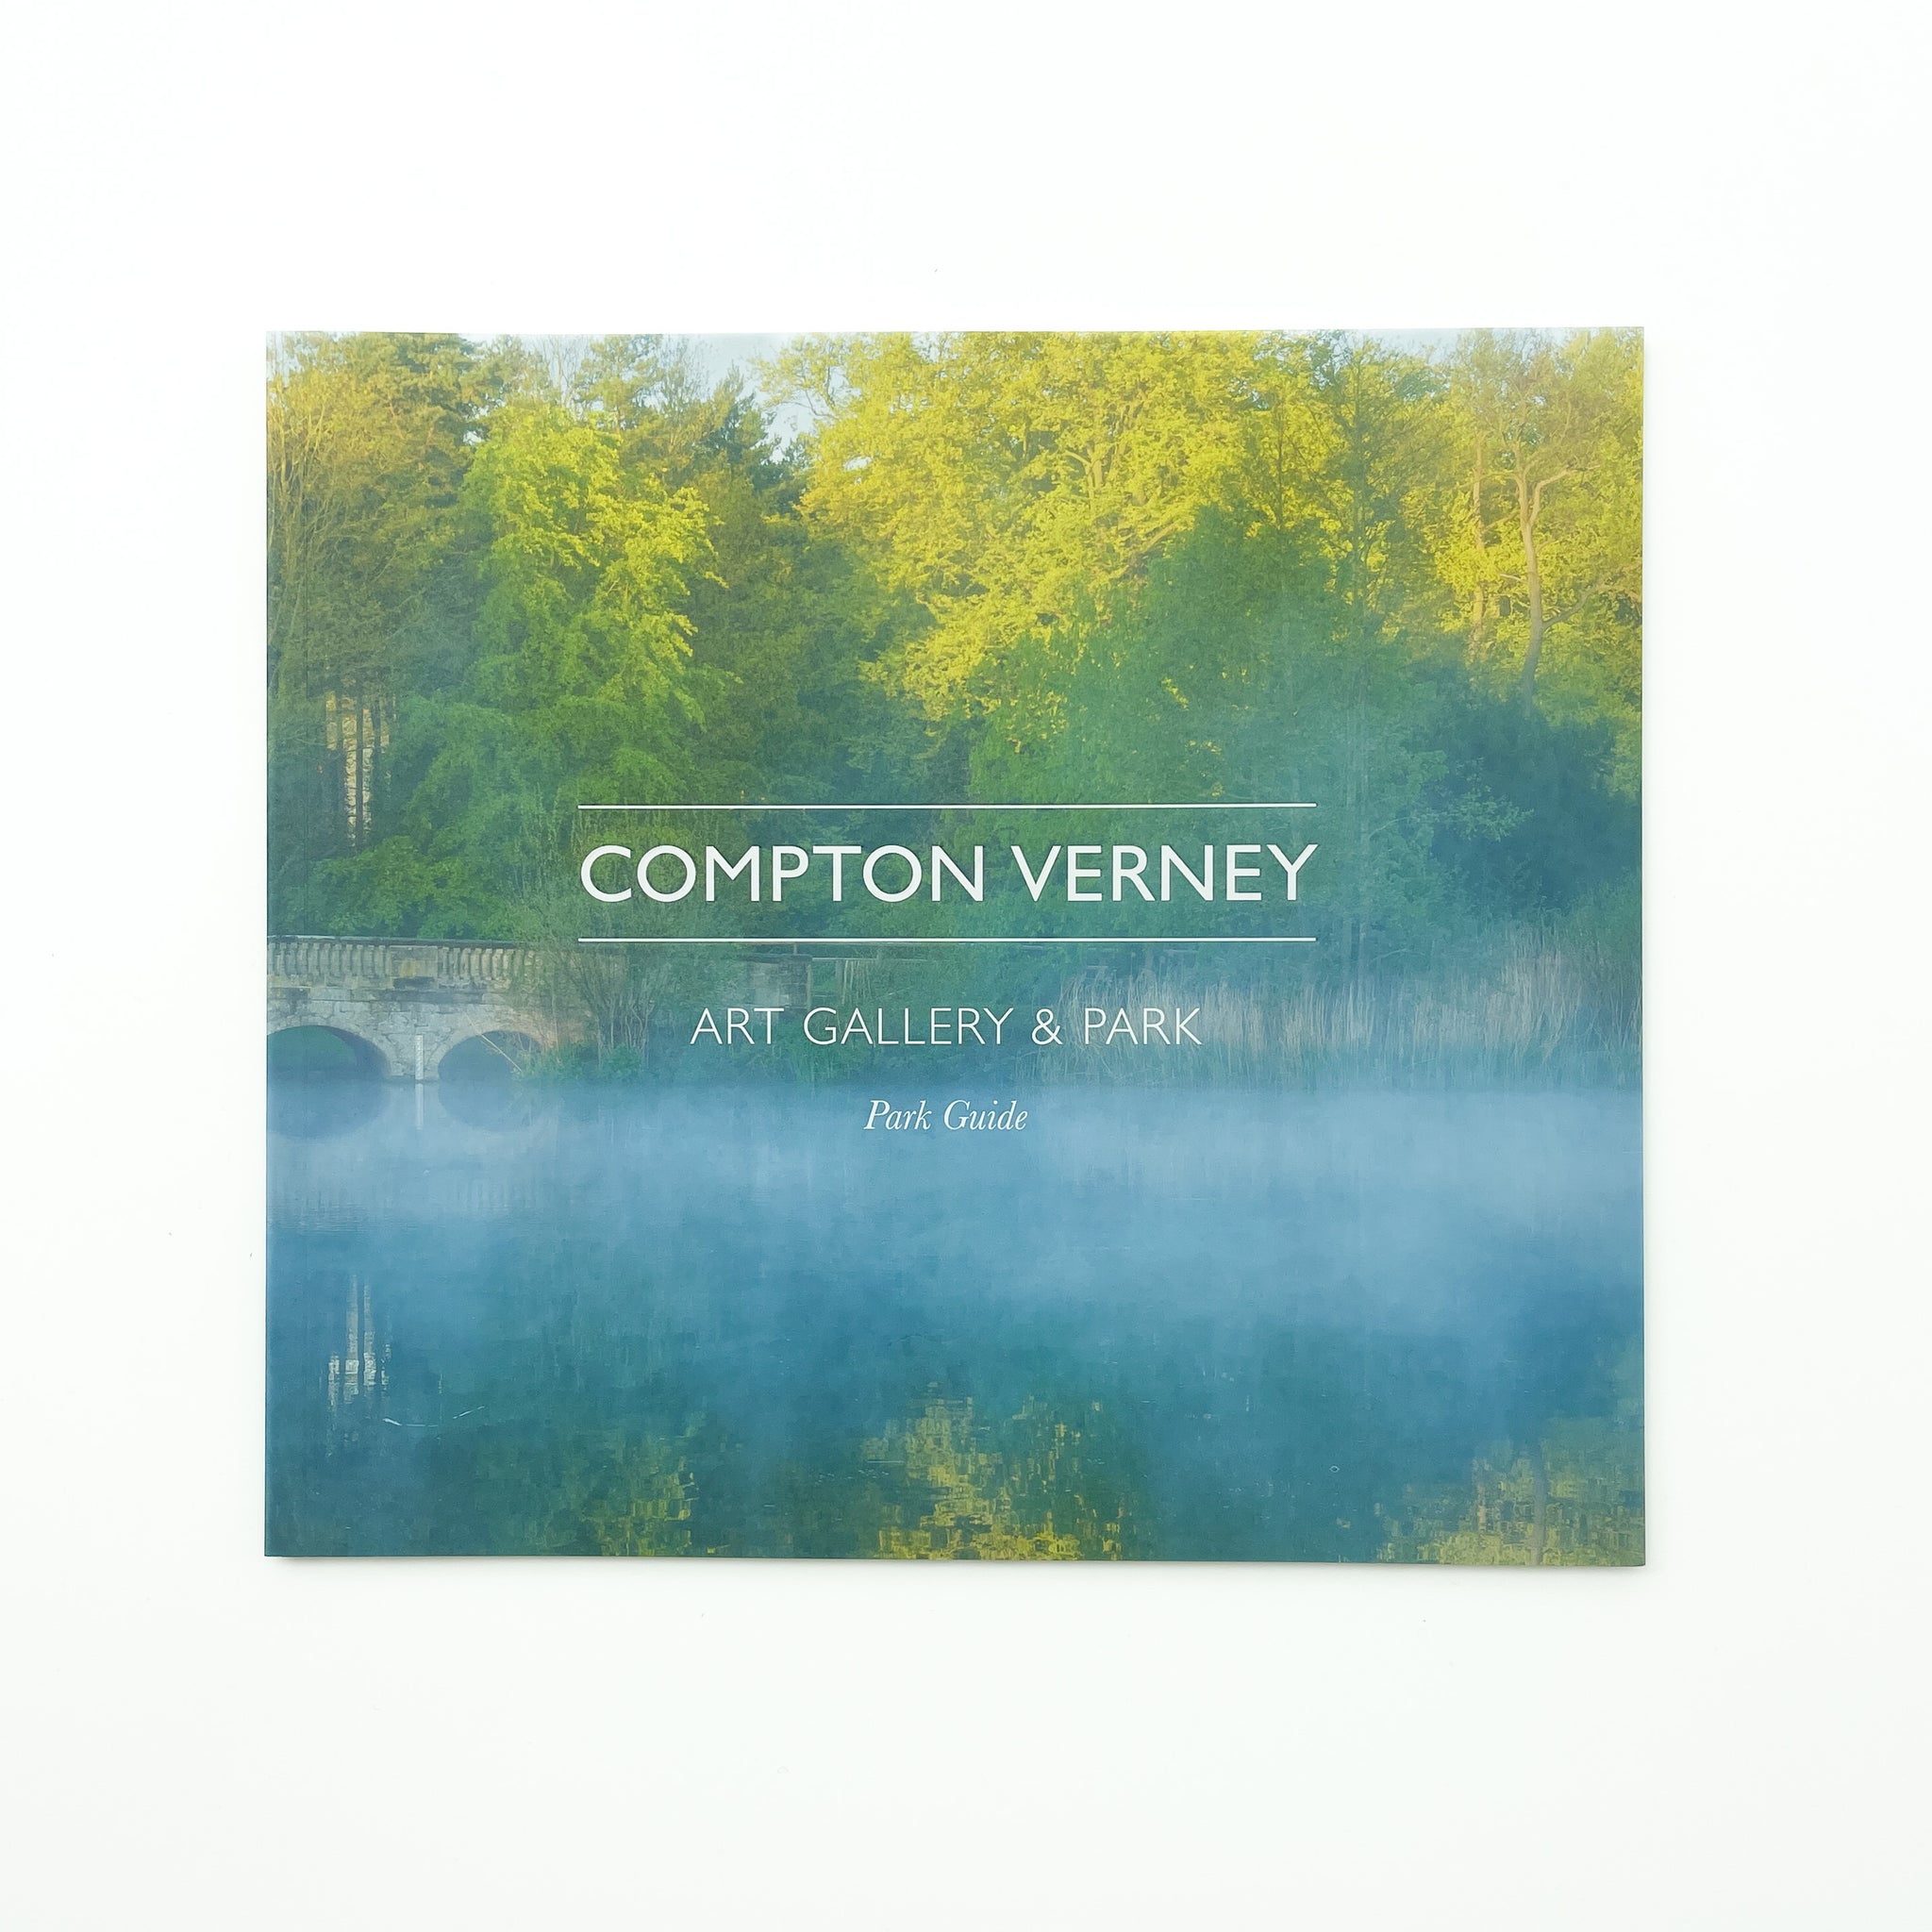 Compton Verney Park Guide